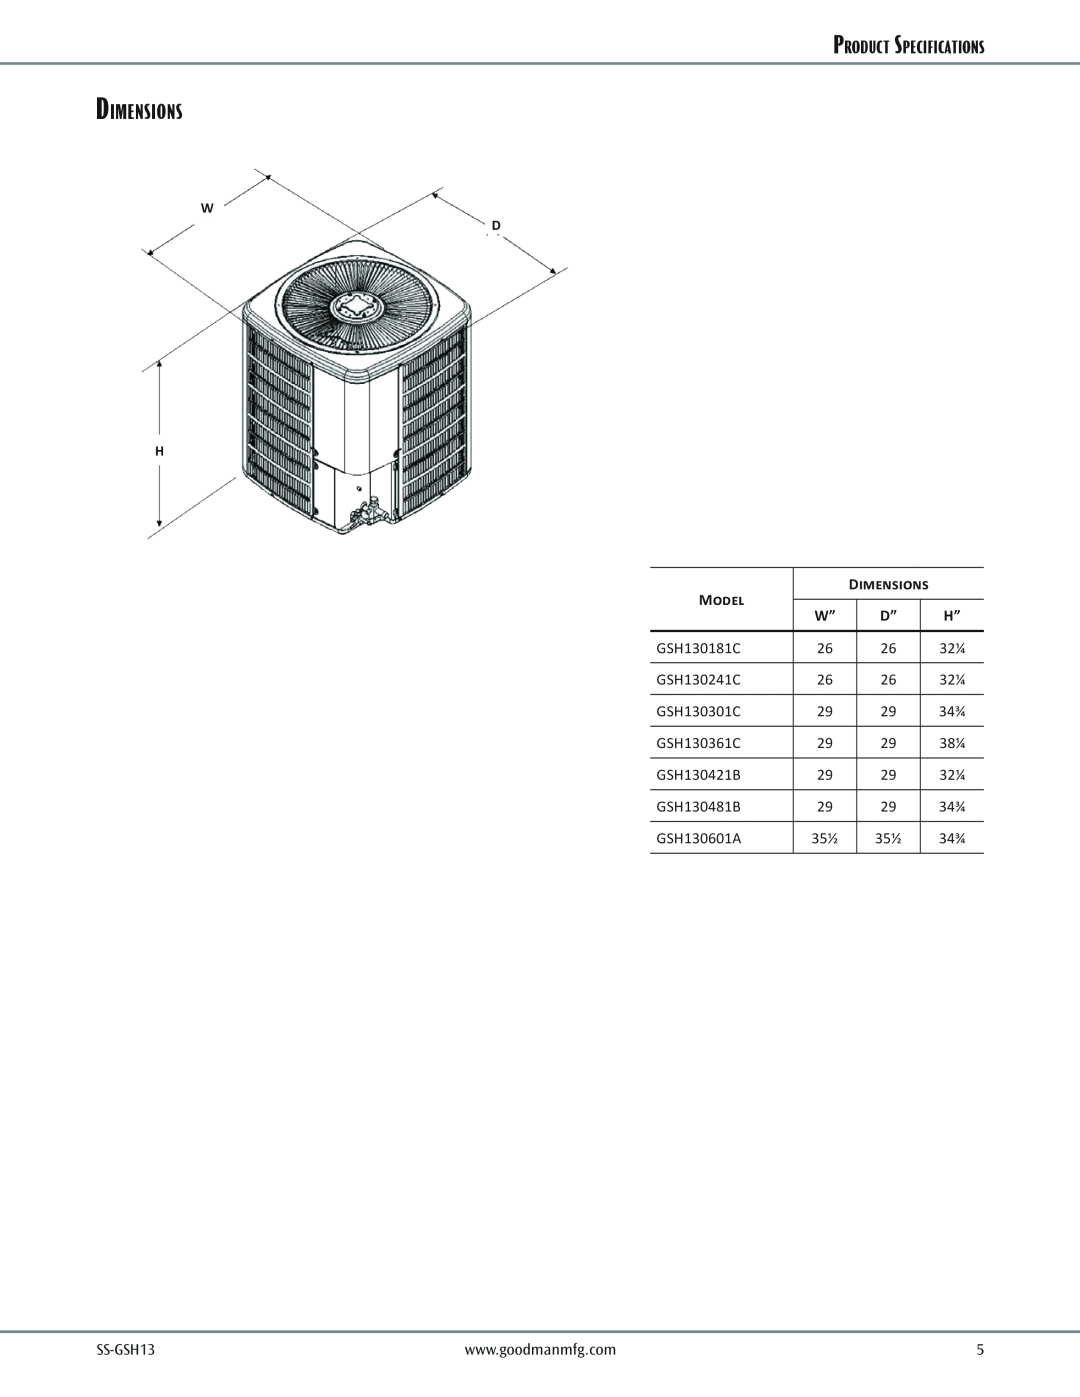 Goodman Mfg GSH13 warranty Dimensions, Product Specifications, Model 